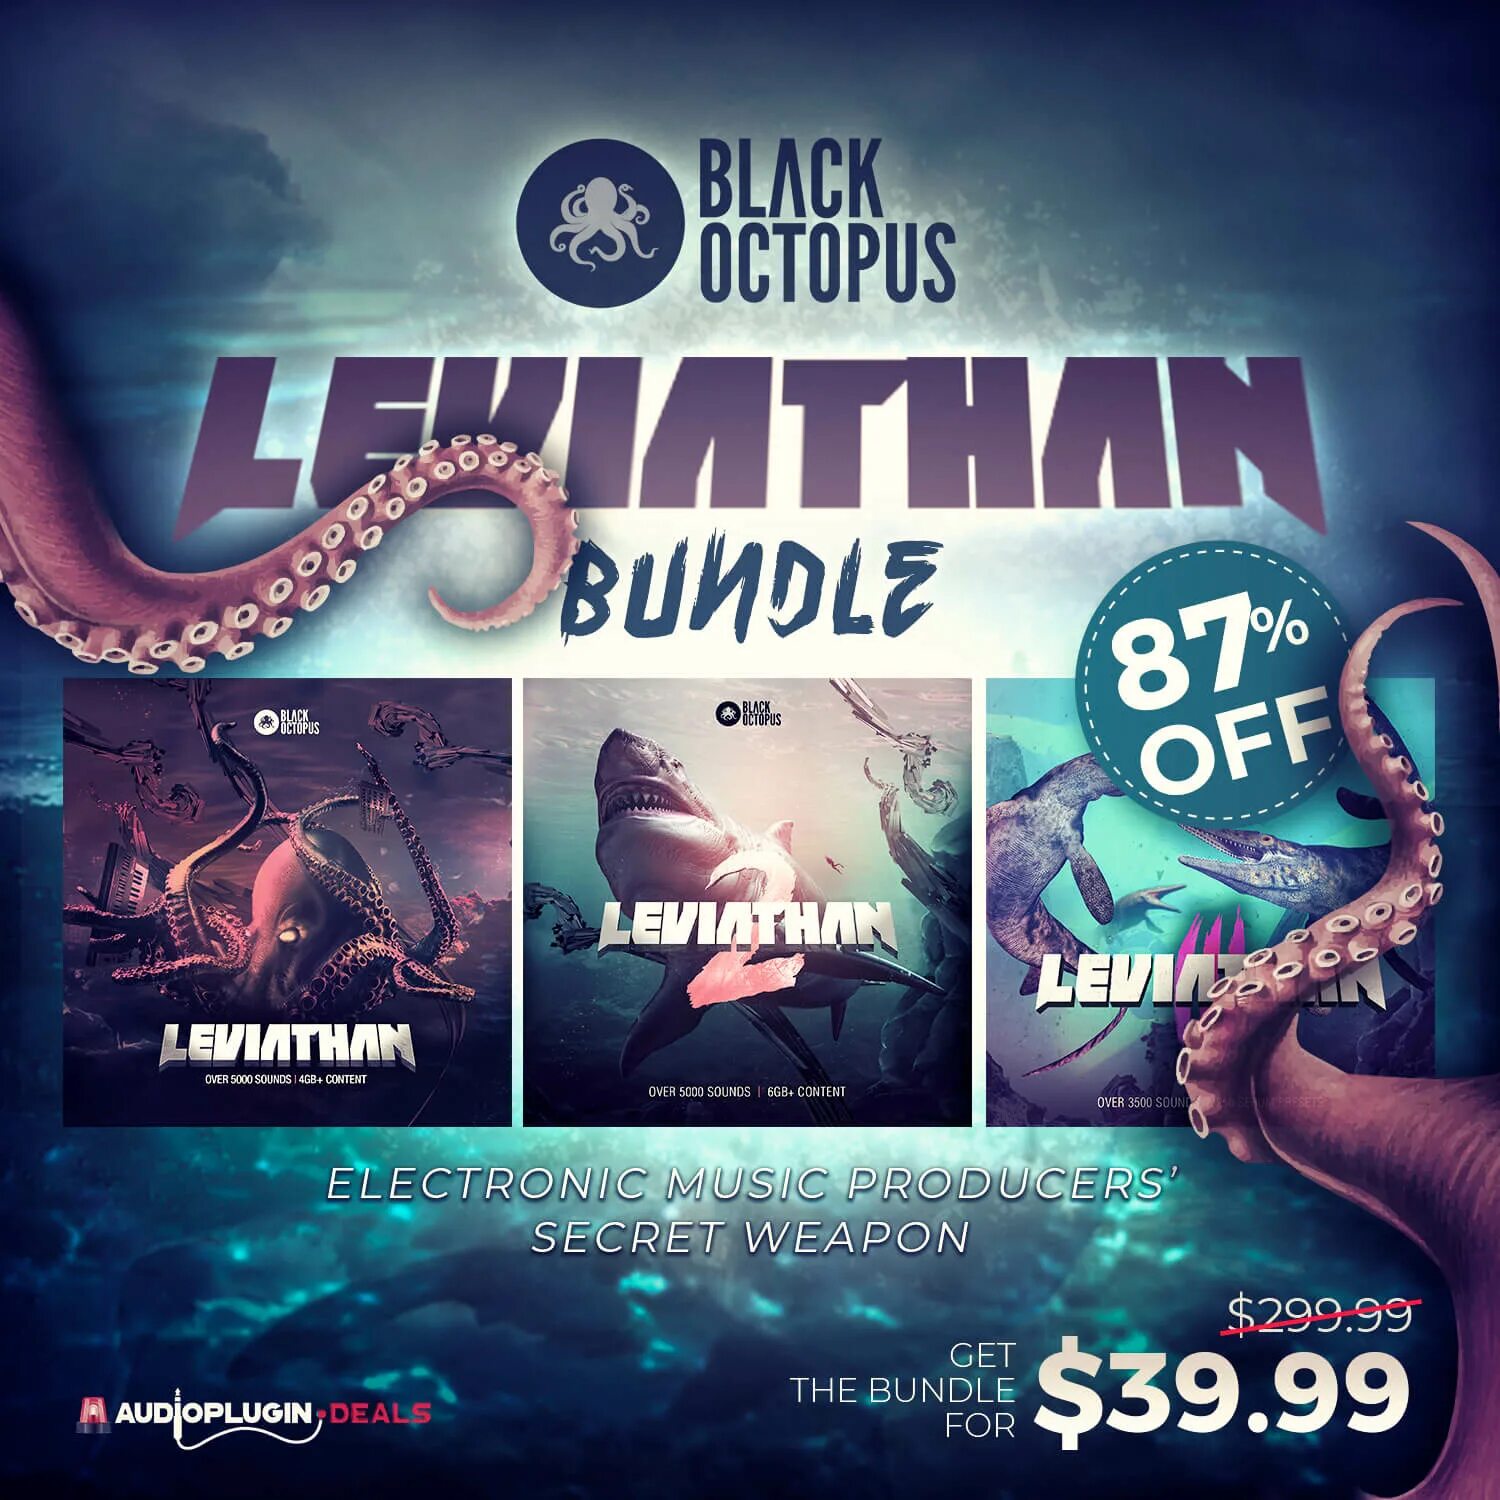 Black Octopus Sound - Leviathan. Black Octopus Sound - Leviathan 3. Black Octopus Sound - Arctic Chill. Black octopus sound